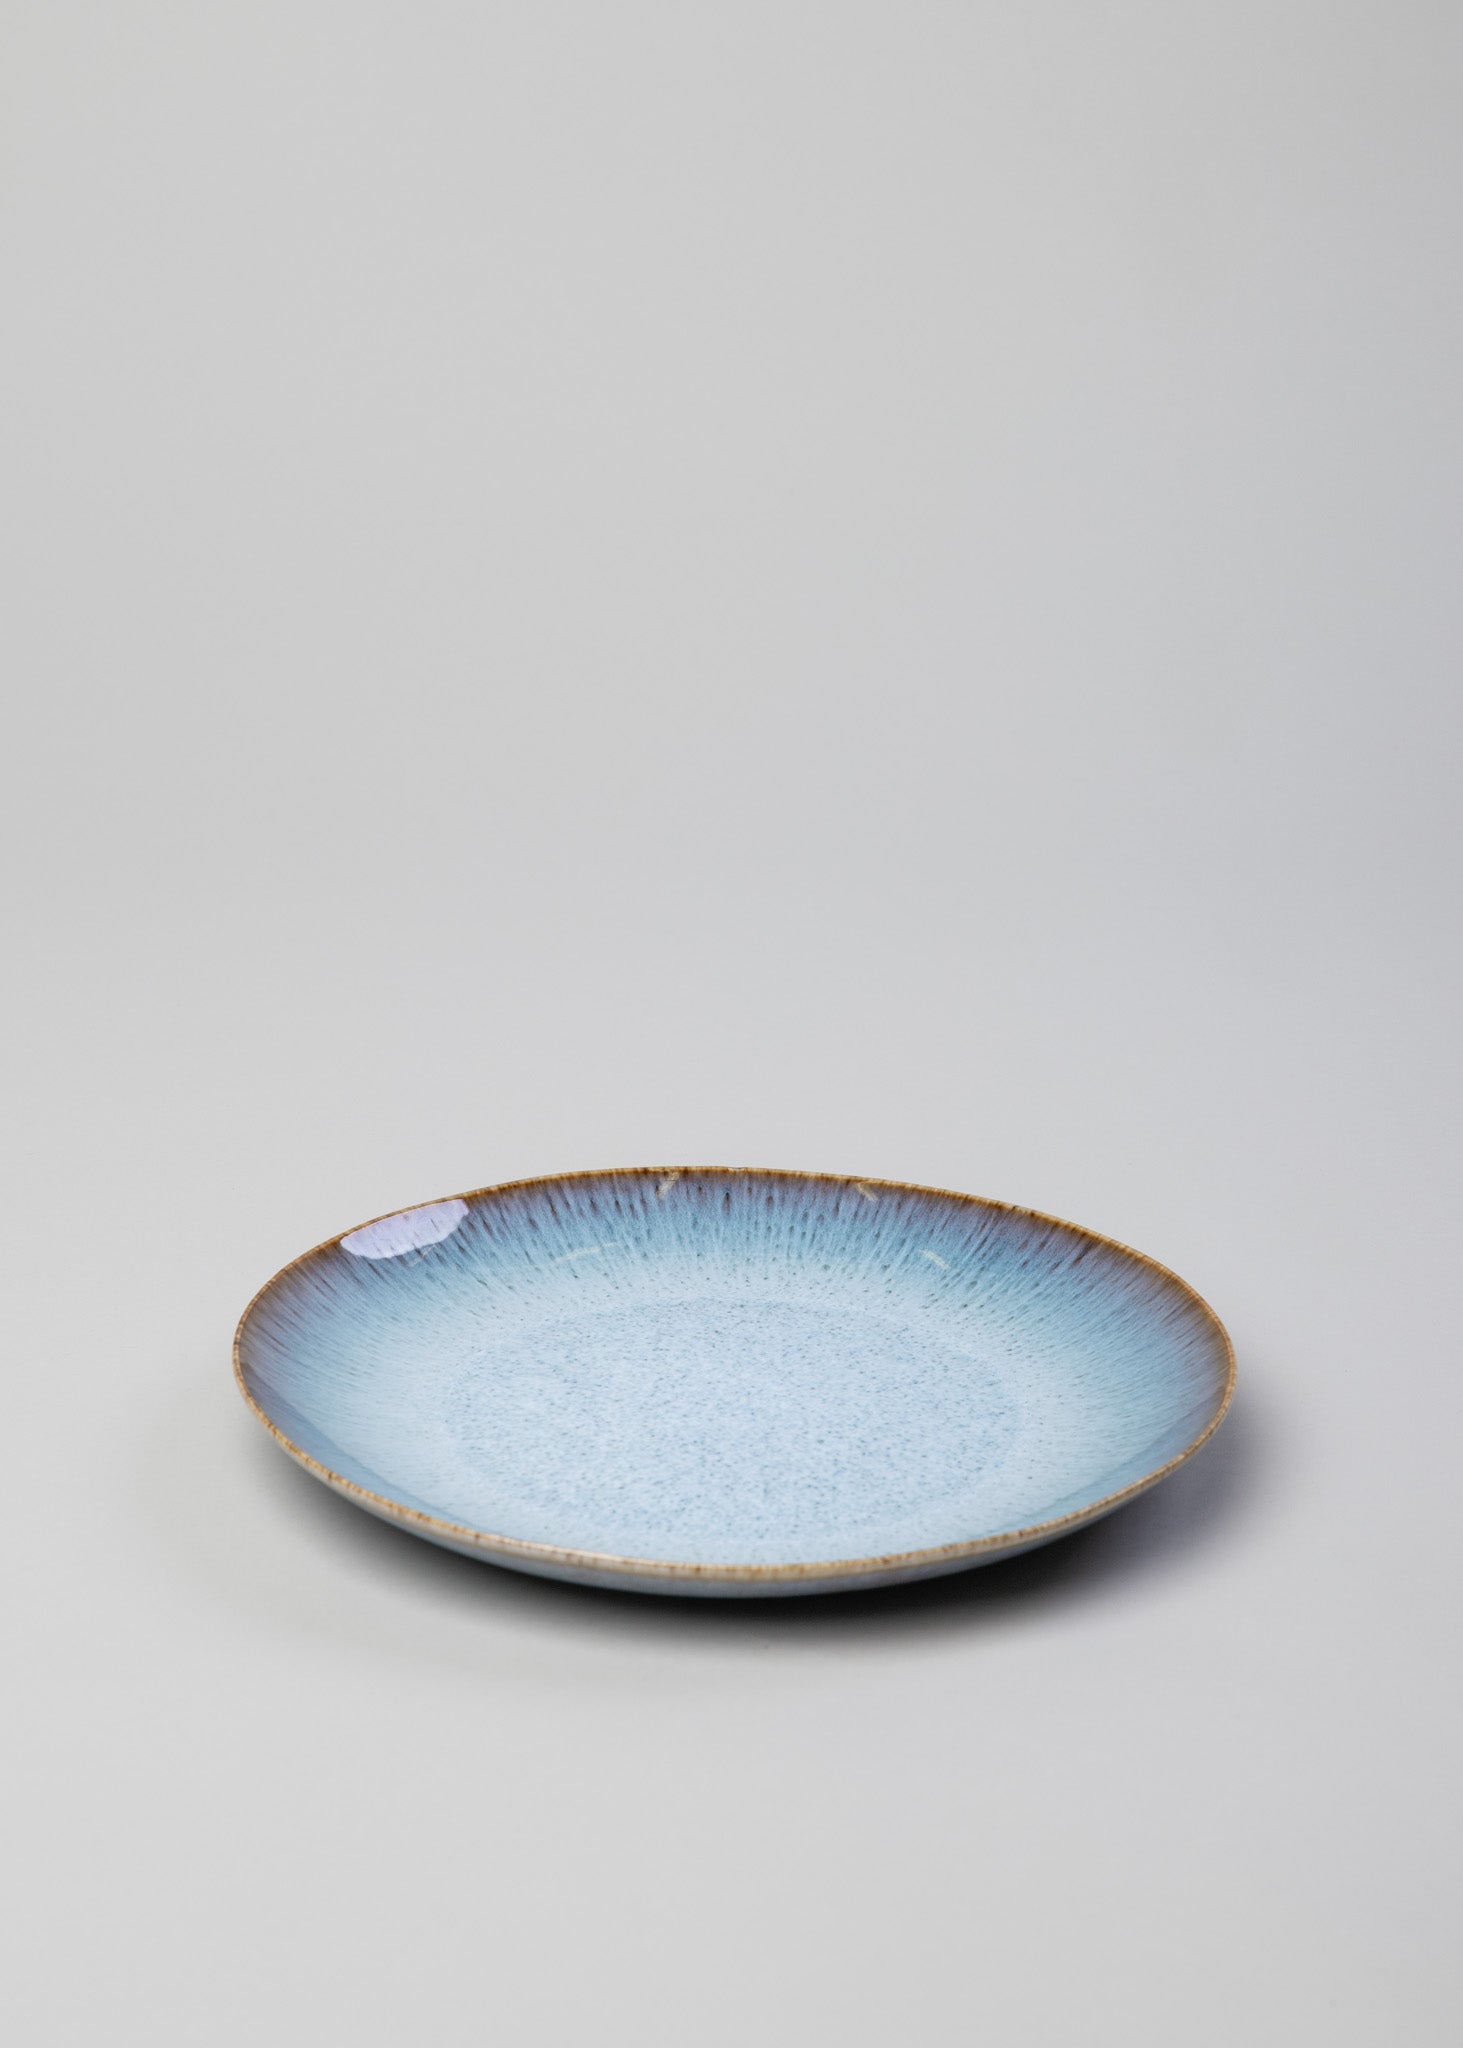 großer Keramik Teller von Vida Nova Ceramica